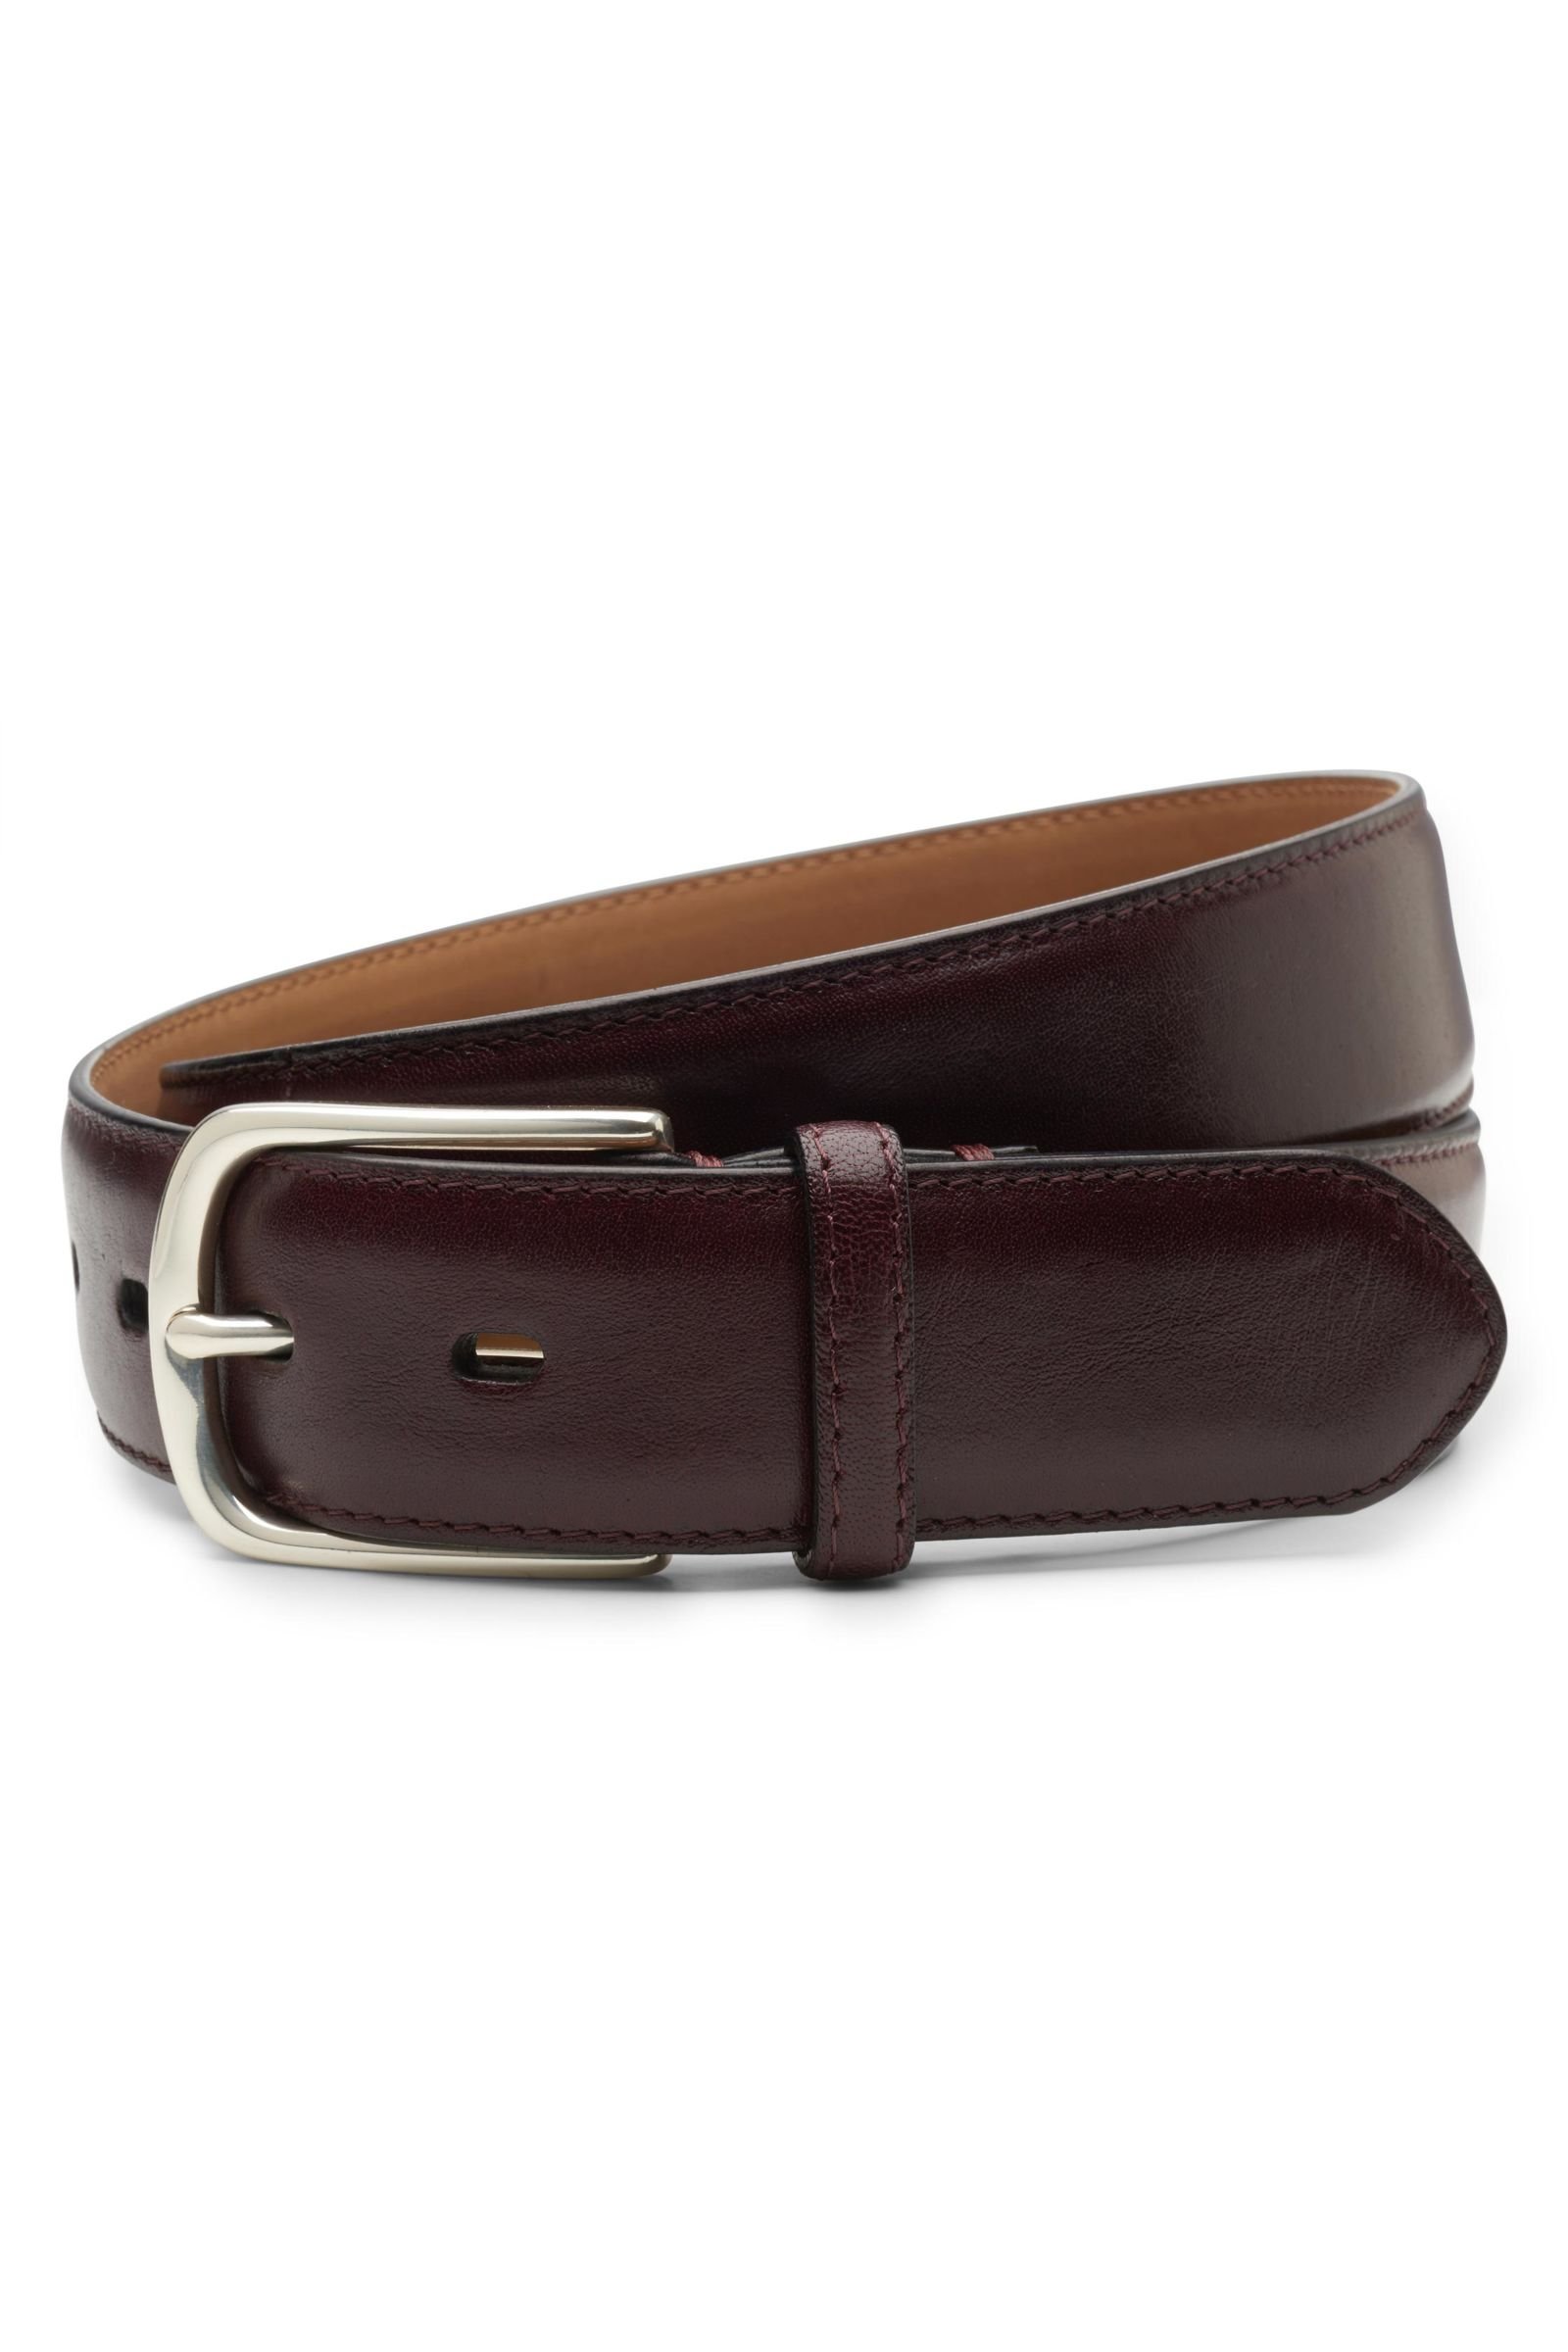 Kangaroo leather belt burgundy